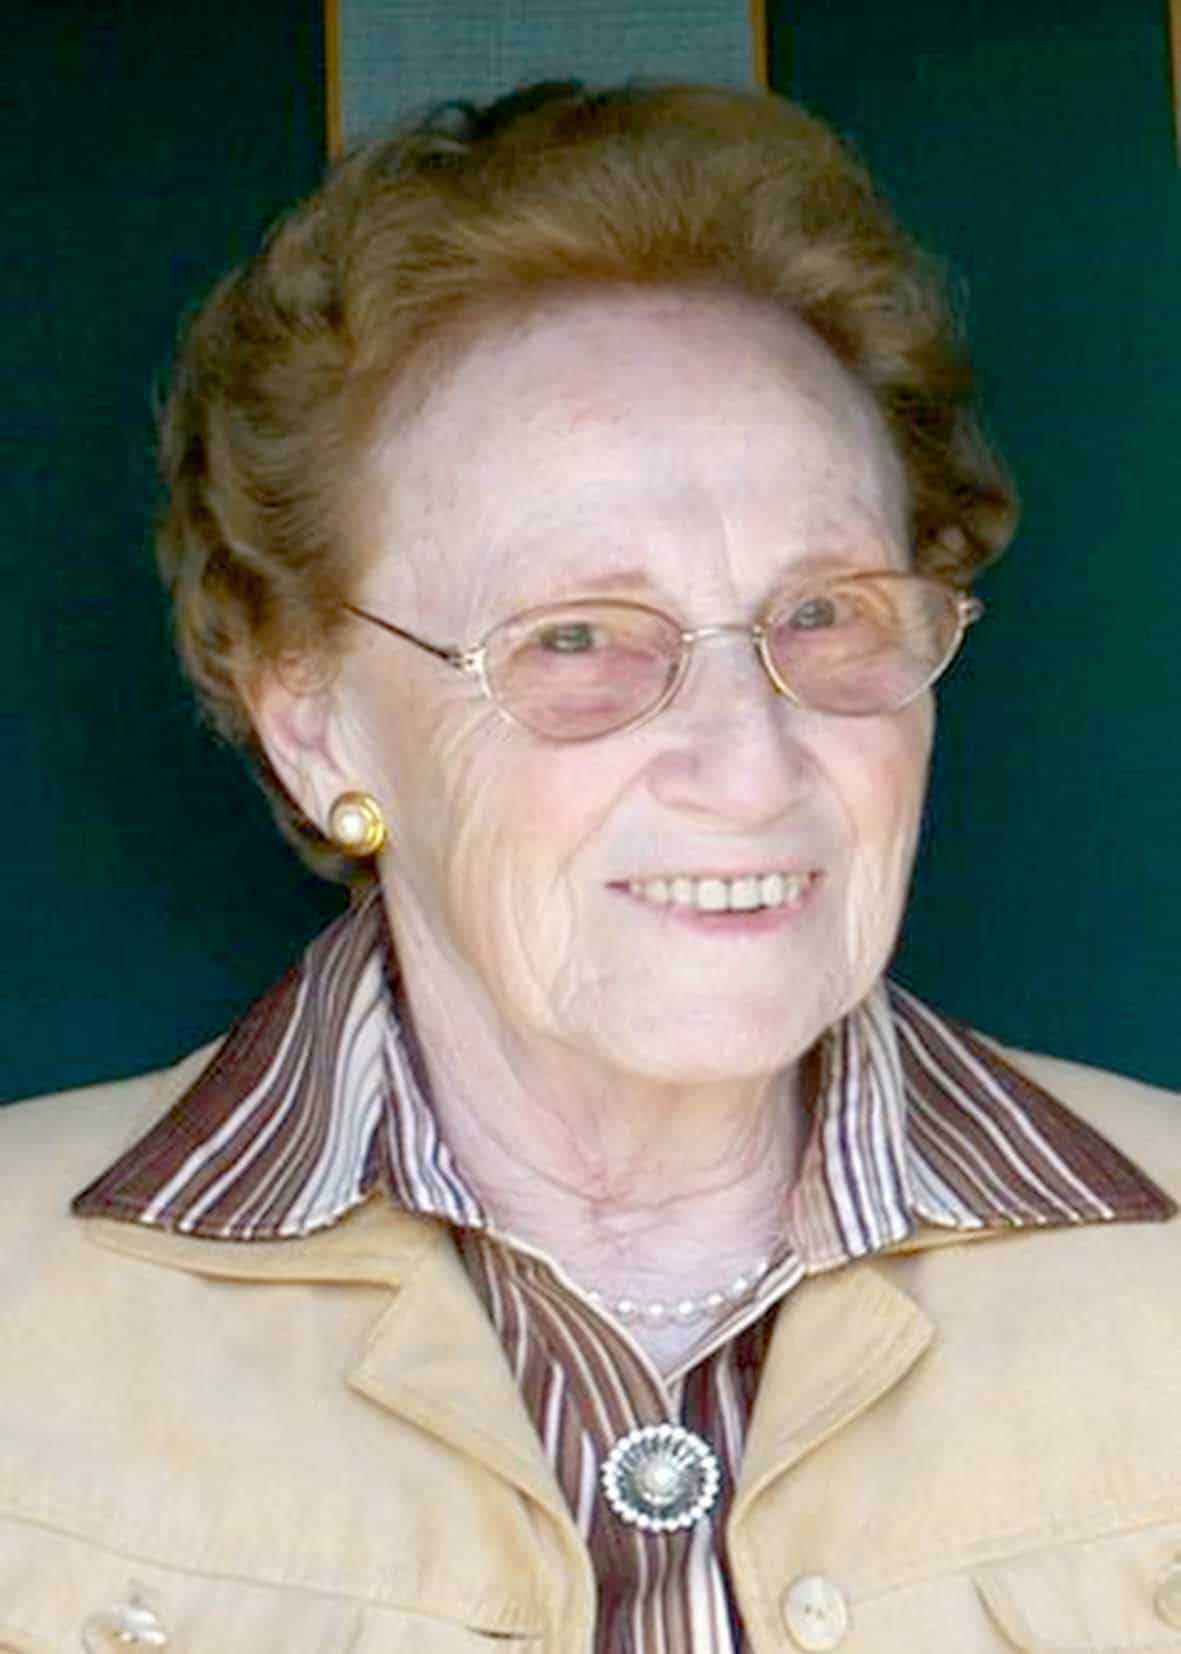 Hilda Punkel (90)